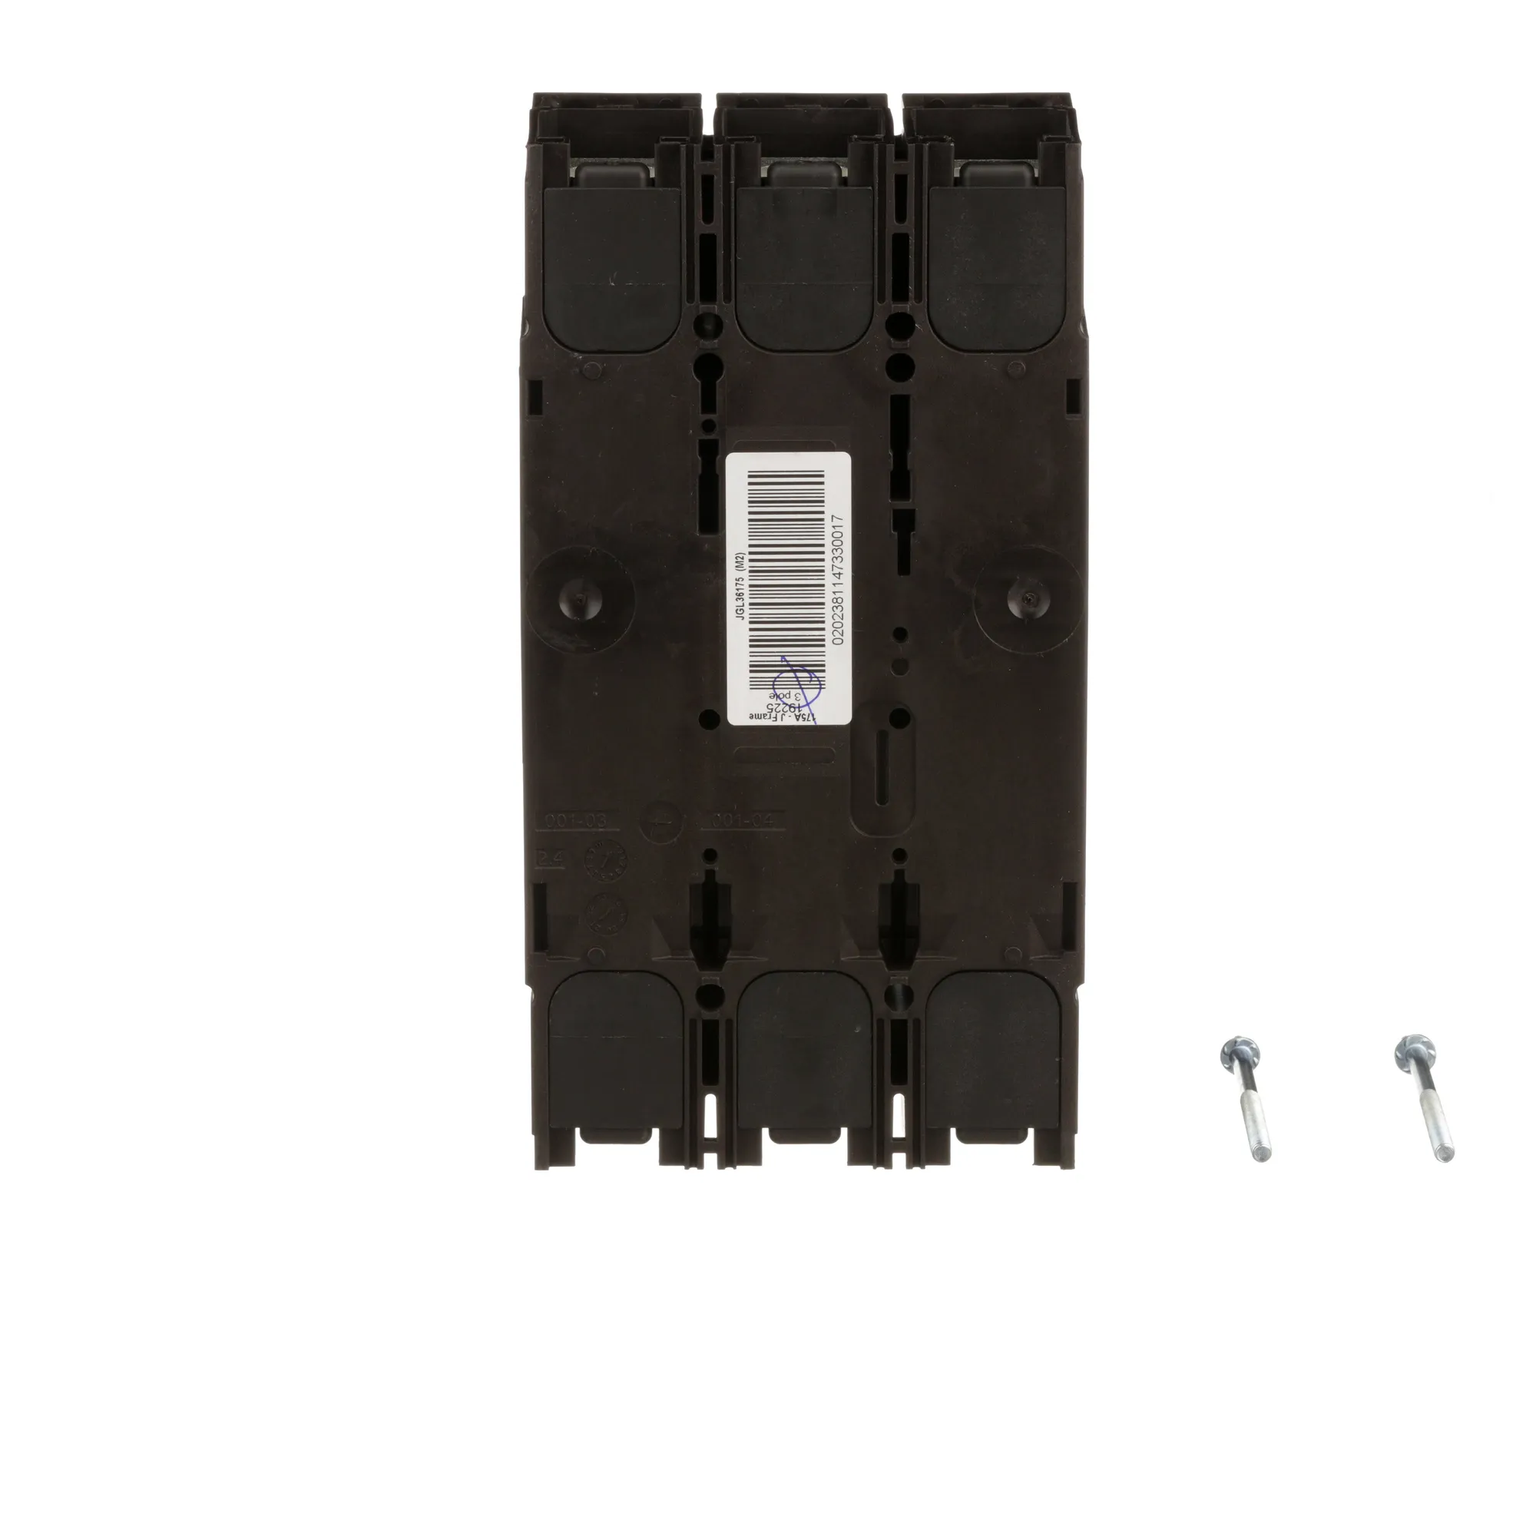 JGL36175 - Square D - Molded Case Circuit Breaker